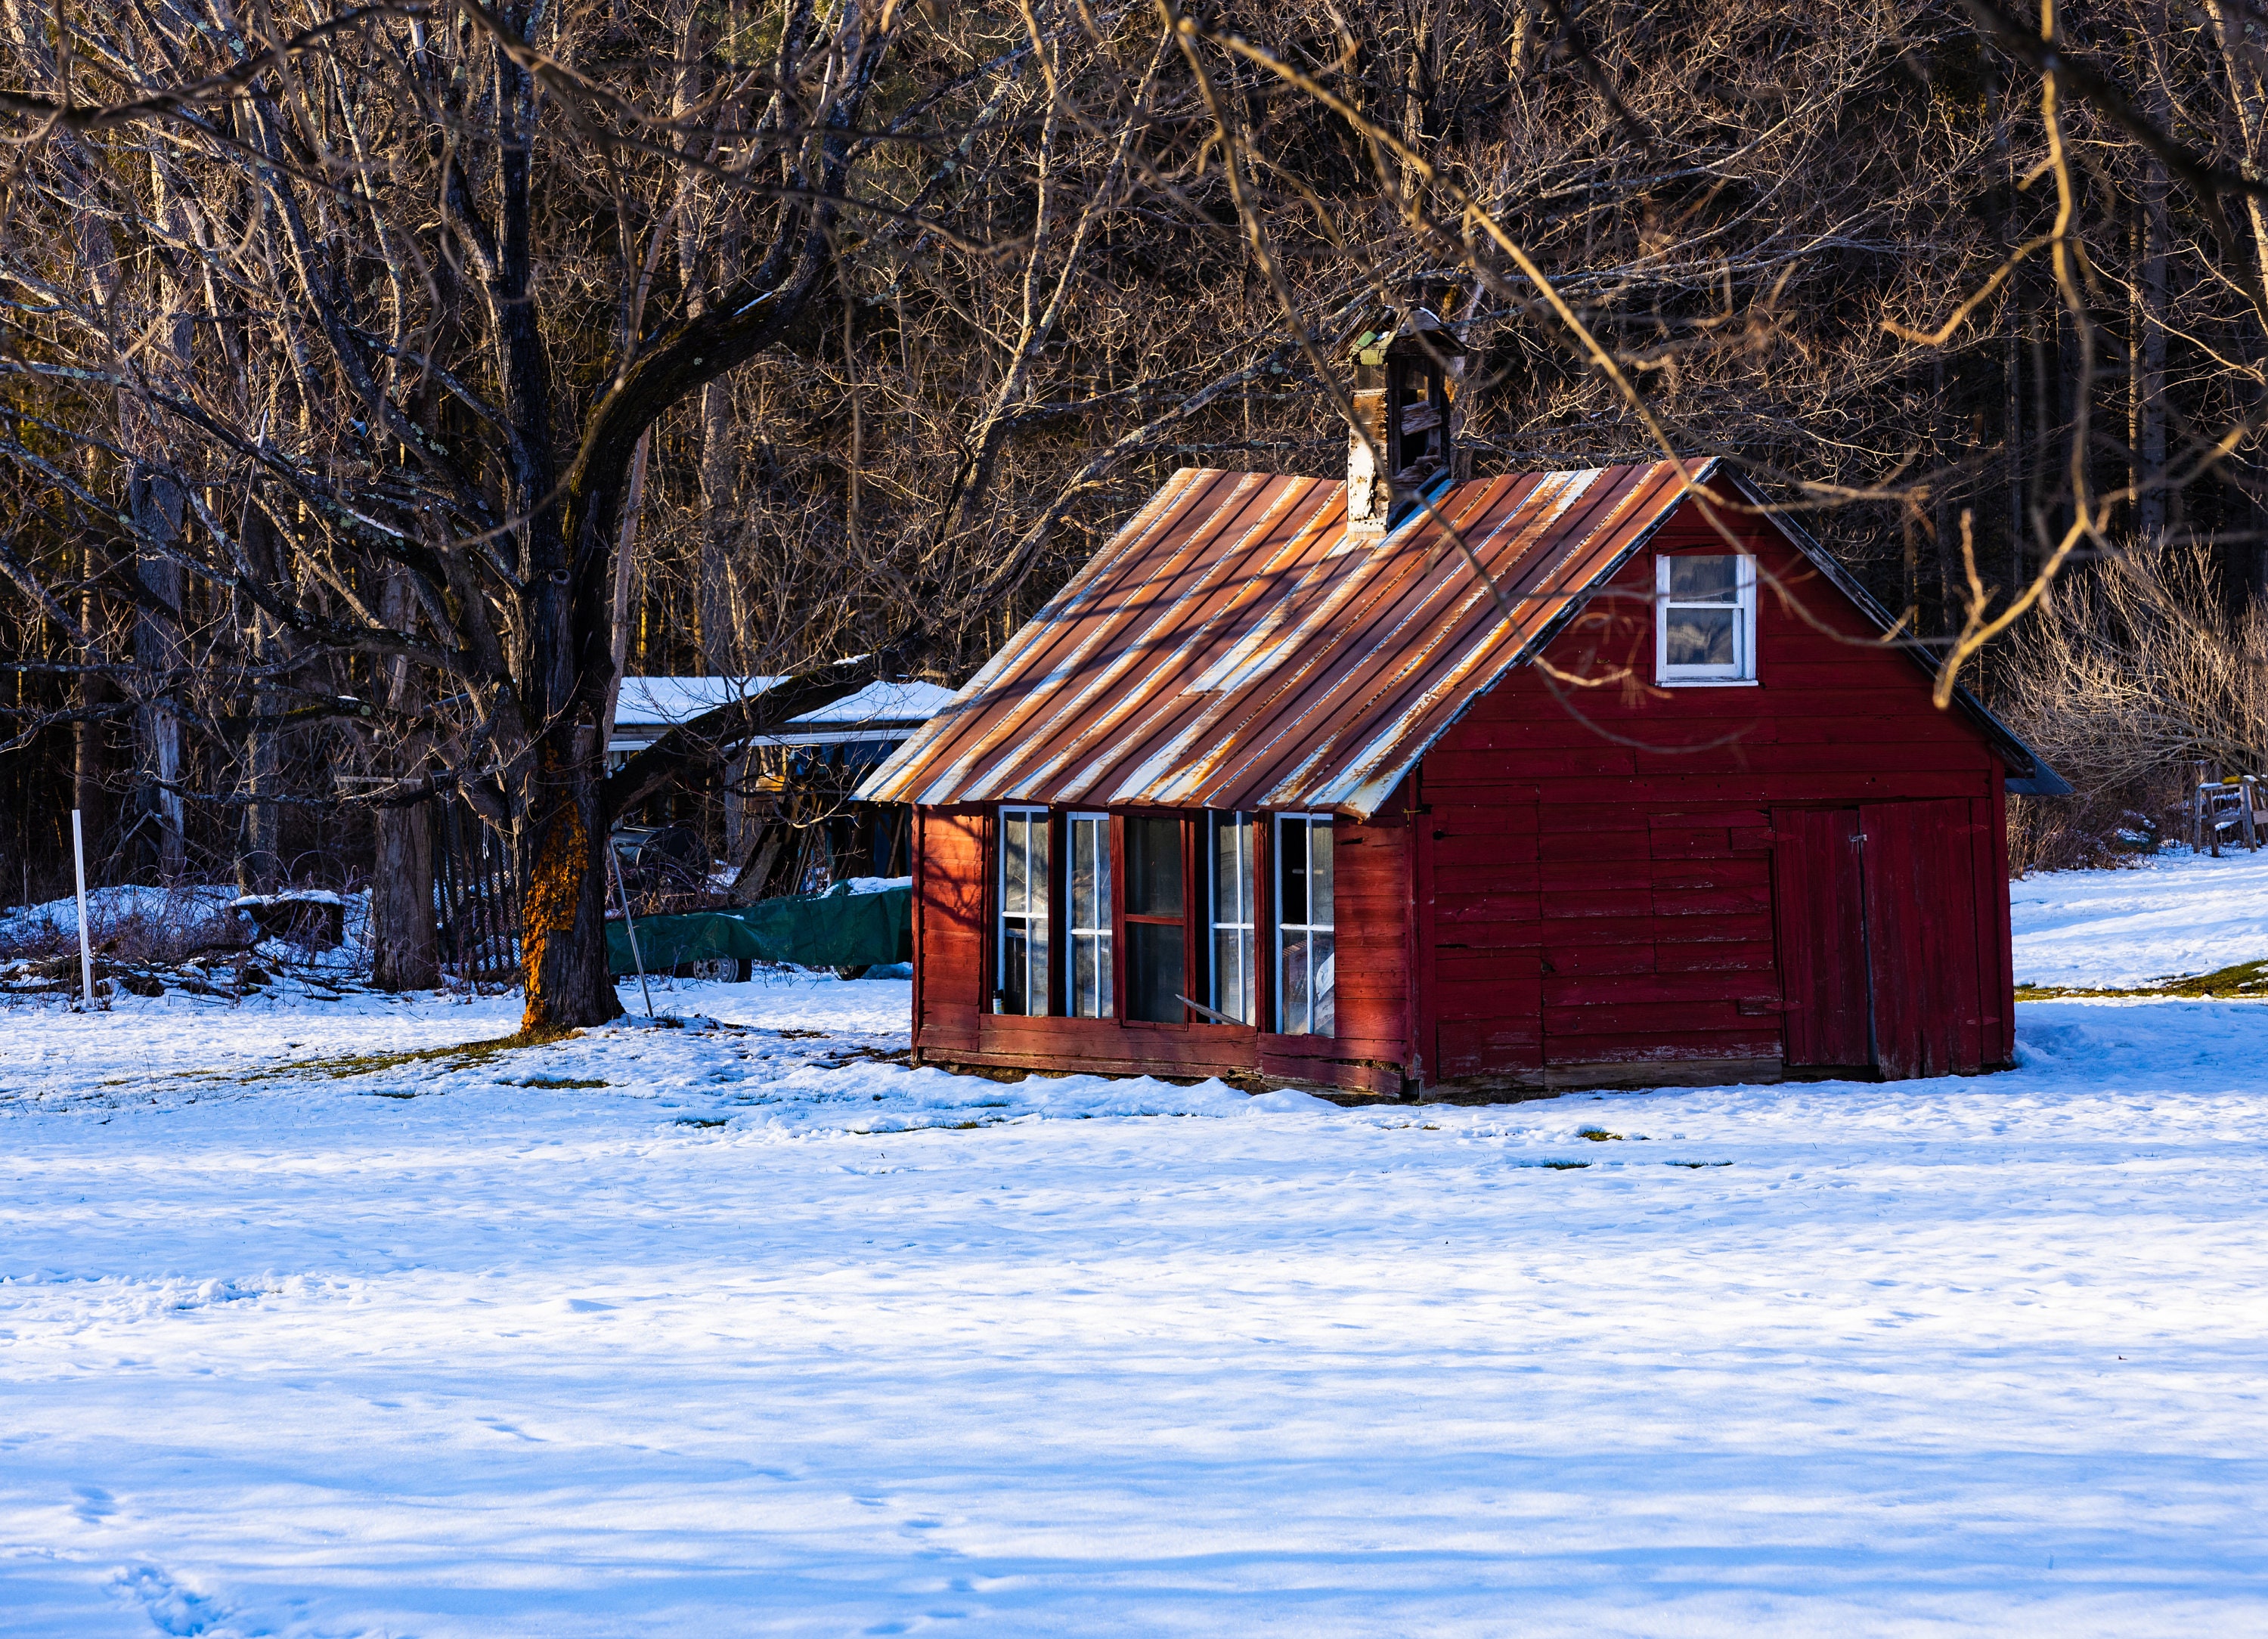 The Red Barn in Log Cabin